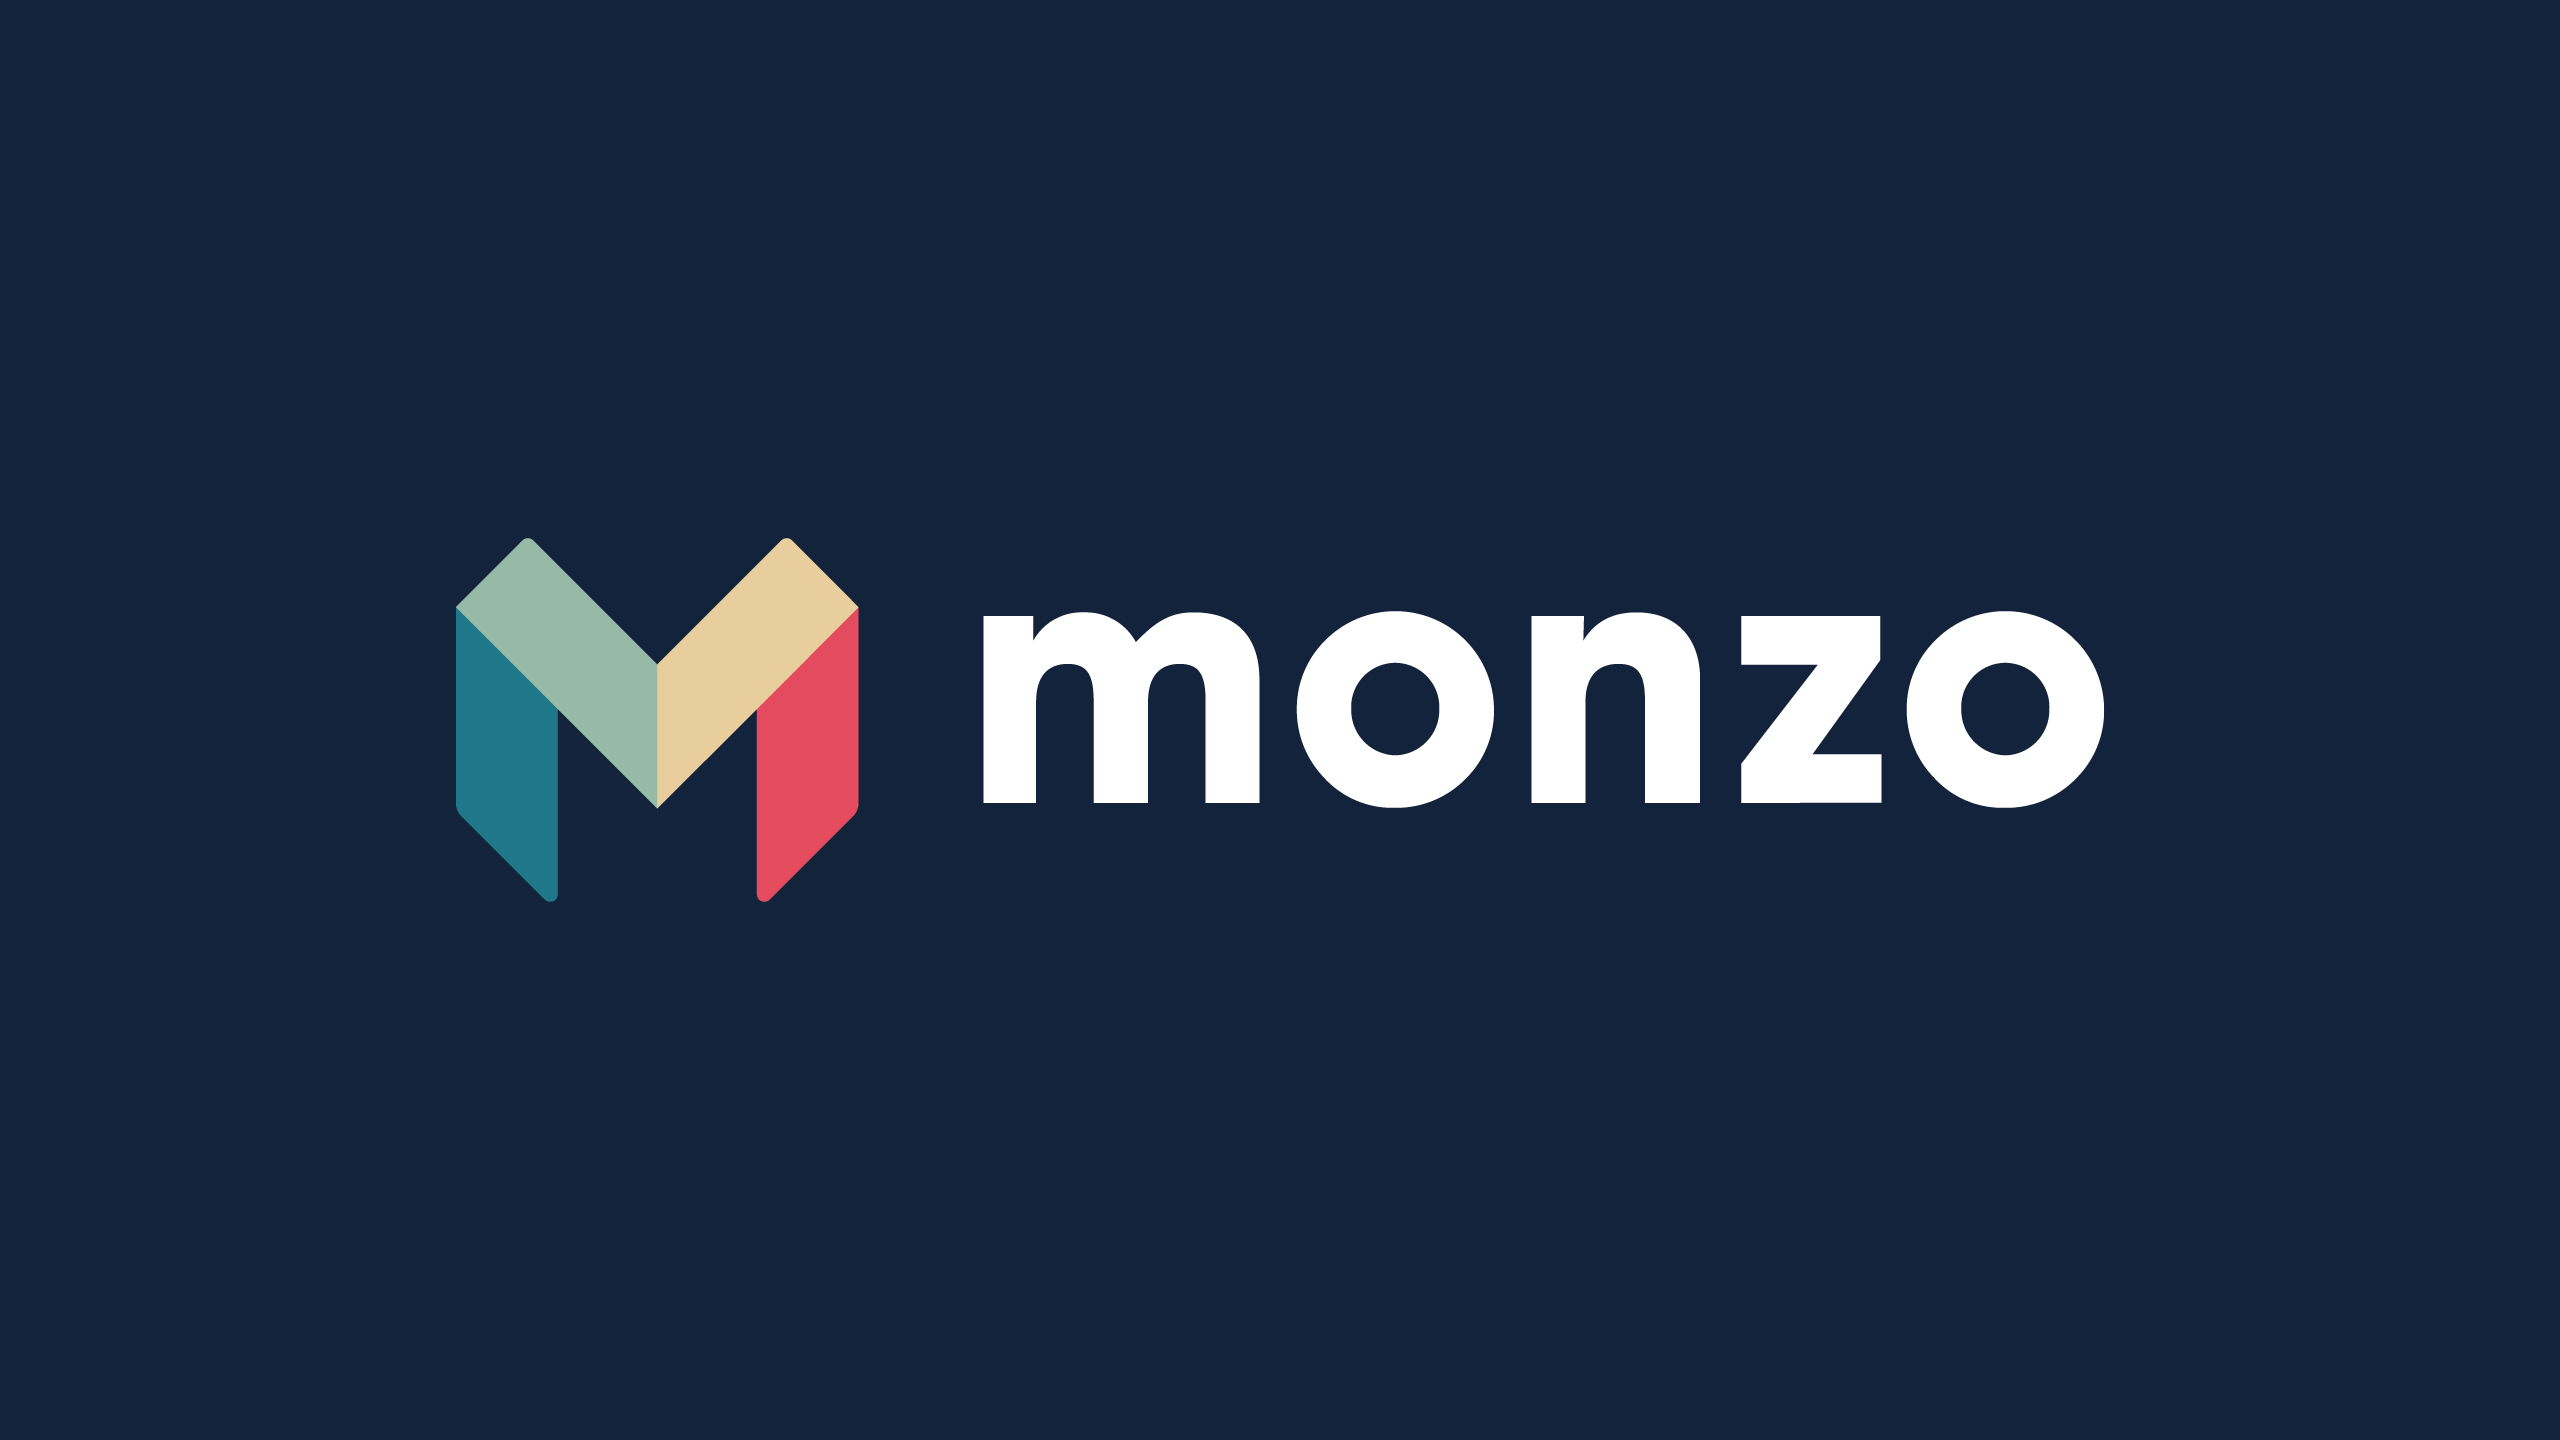 Stripe joins $93 million investment into U.K. banking startup Monzo